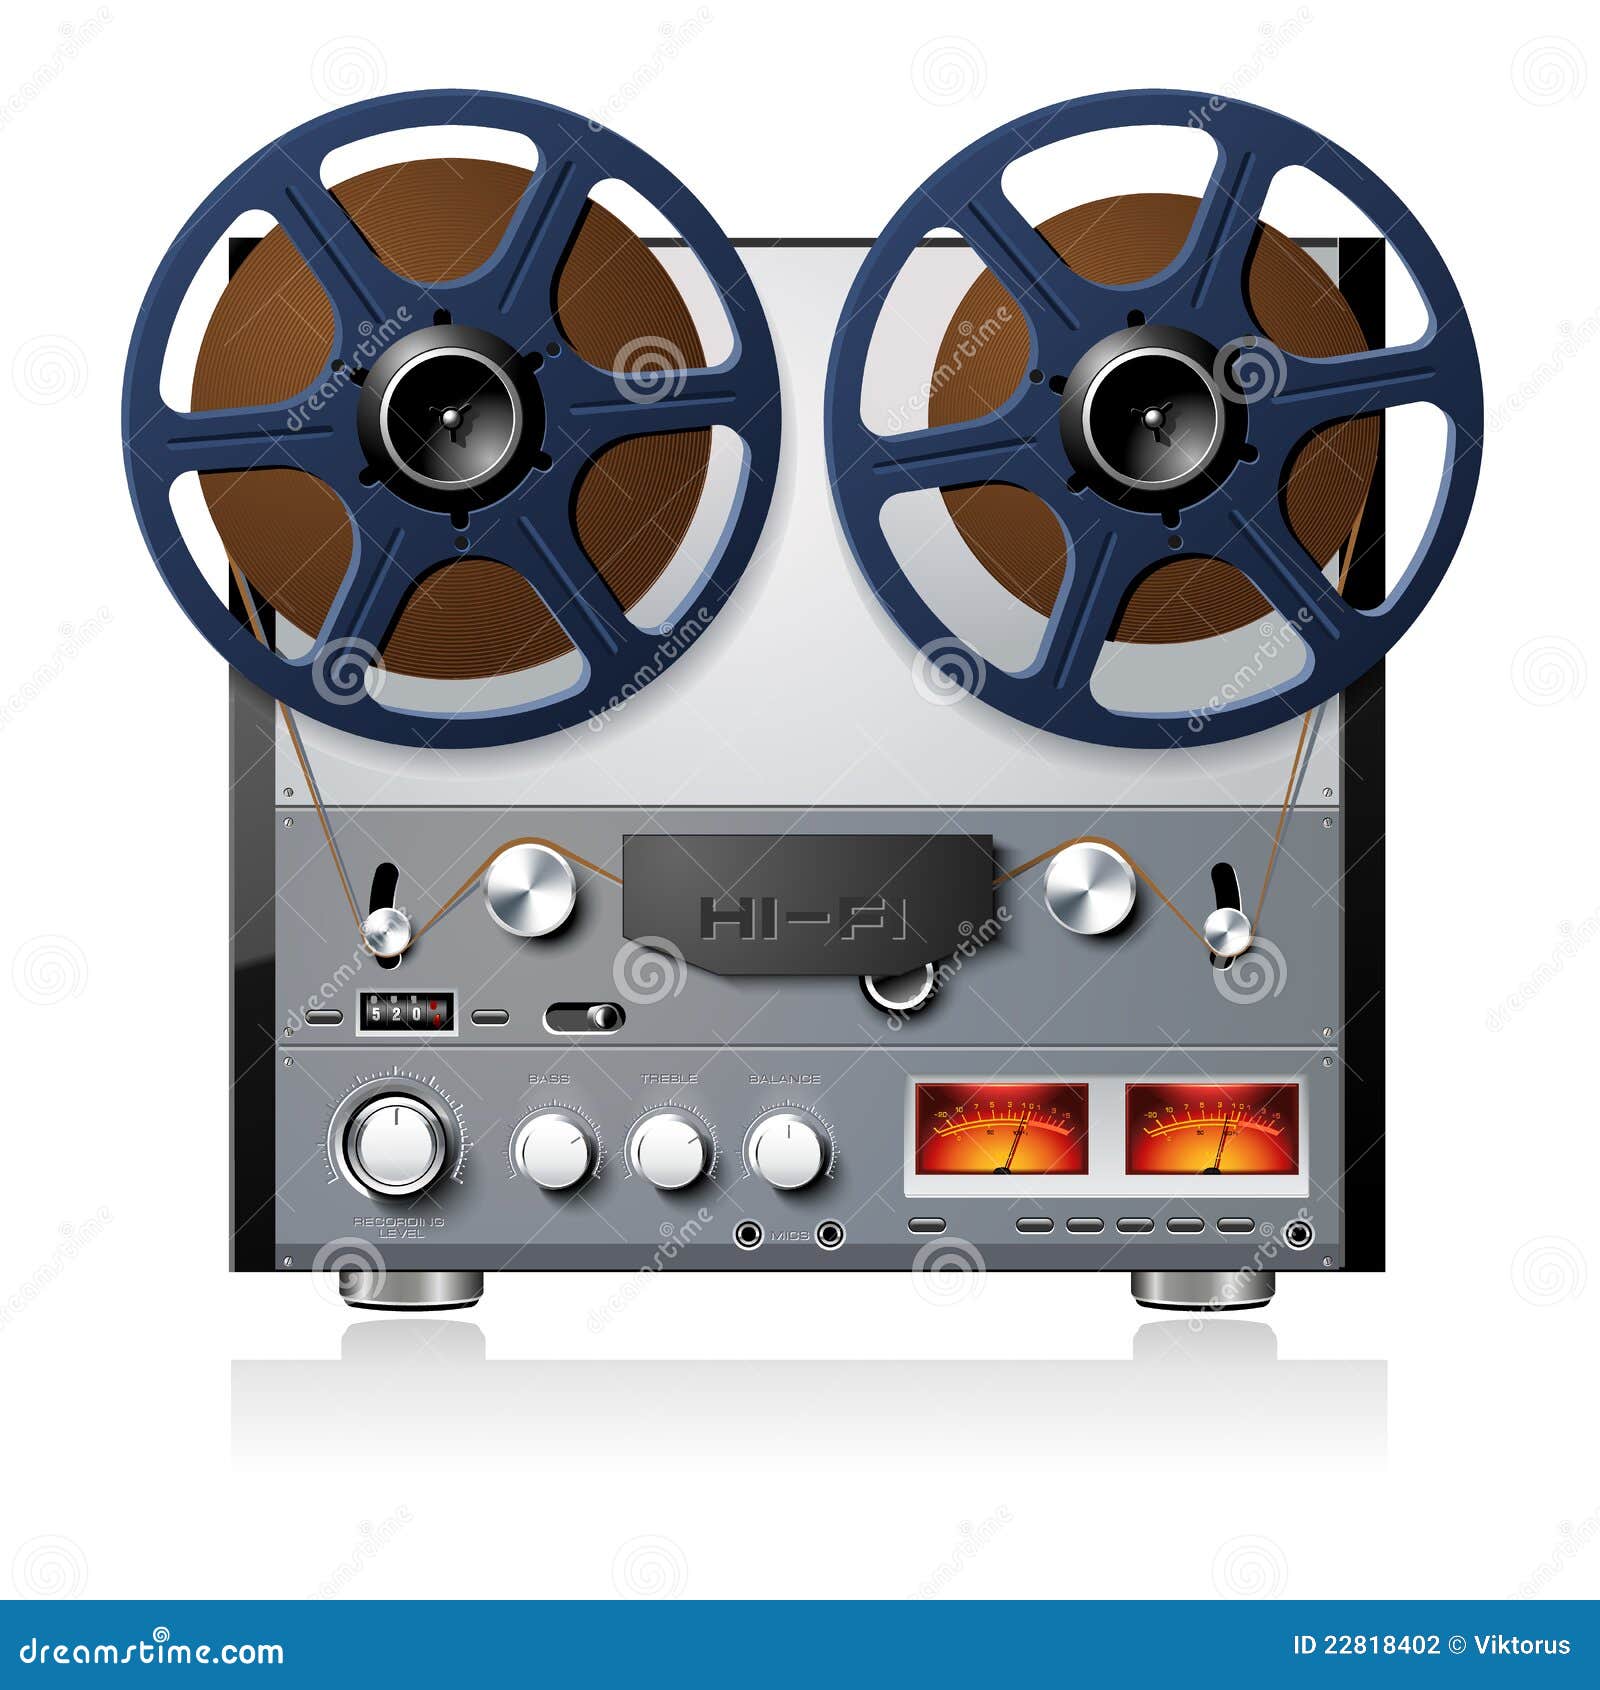 https://thumbs.dreamstime.com/z/stereo-reel-to-reel-tape-deck-player-recorder-22818402.jpg